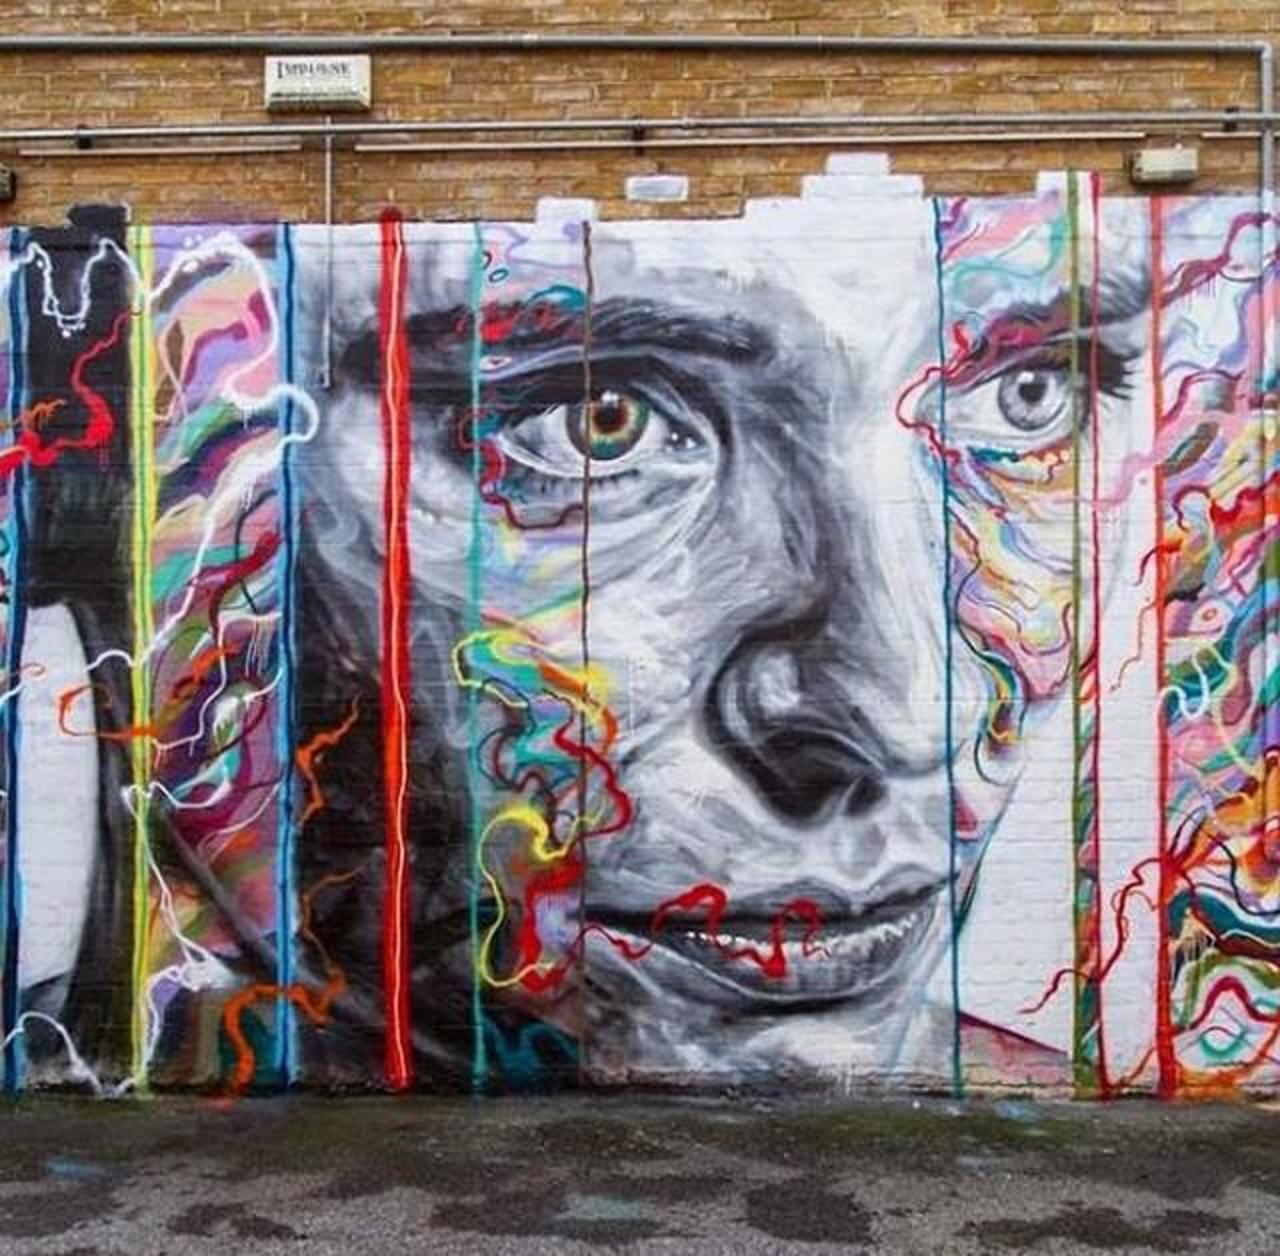 “@GoogleStreetArt: New Street Art colab between @davidwalkerart & @jim_vision in London 

#art #graffiti #streetart http://t.co/qGnPnd662D”